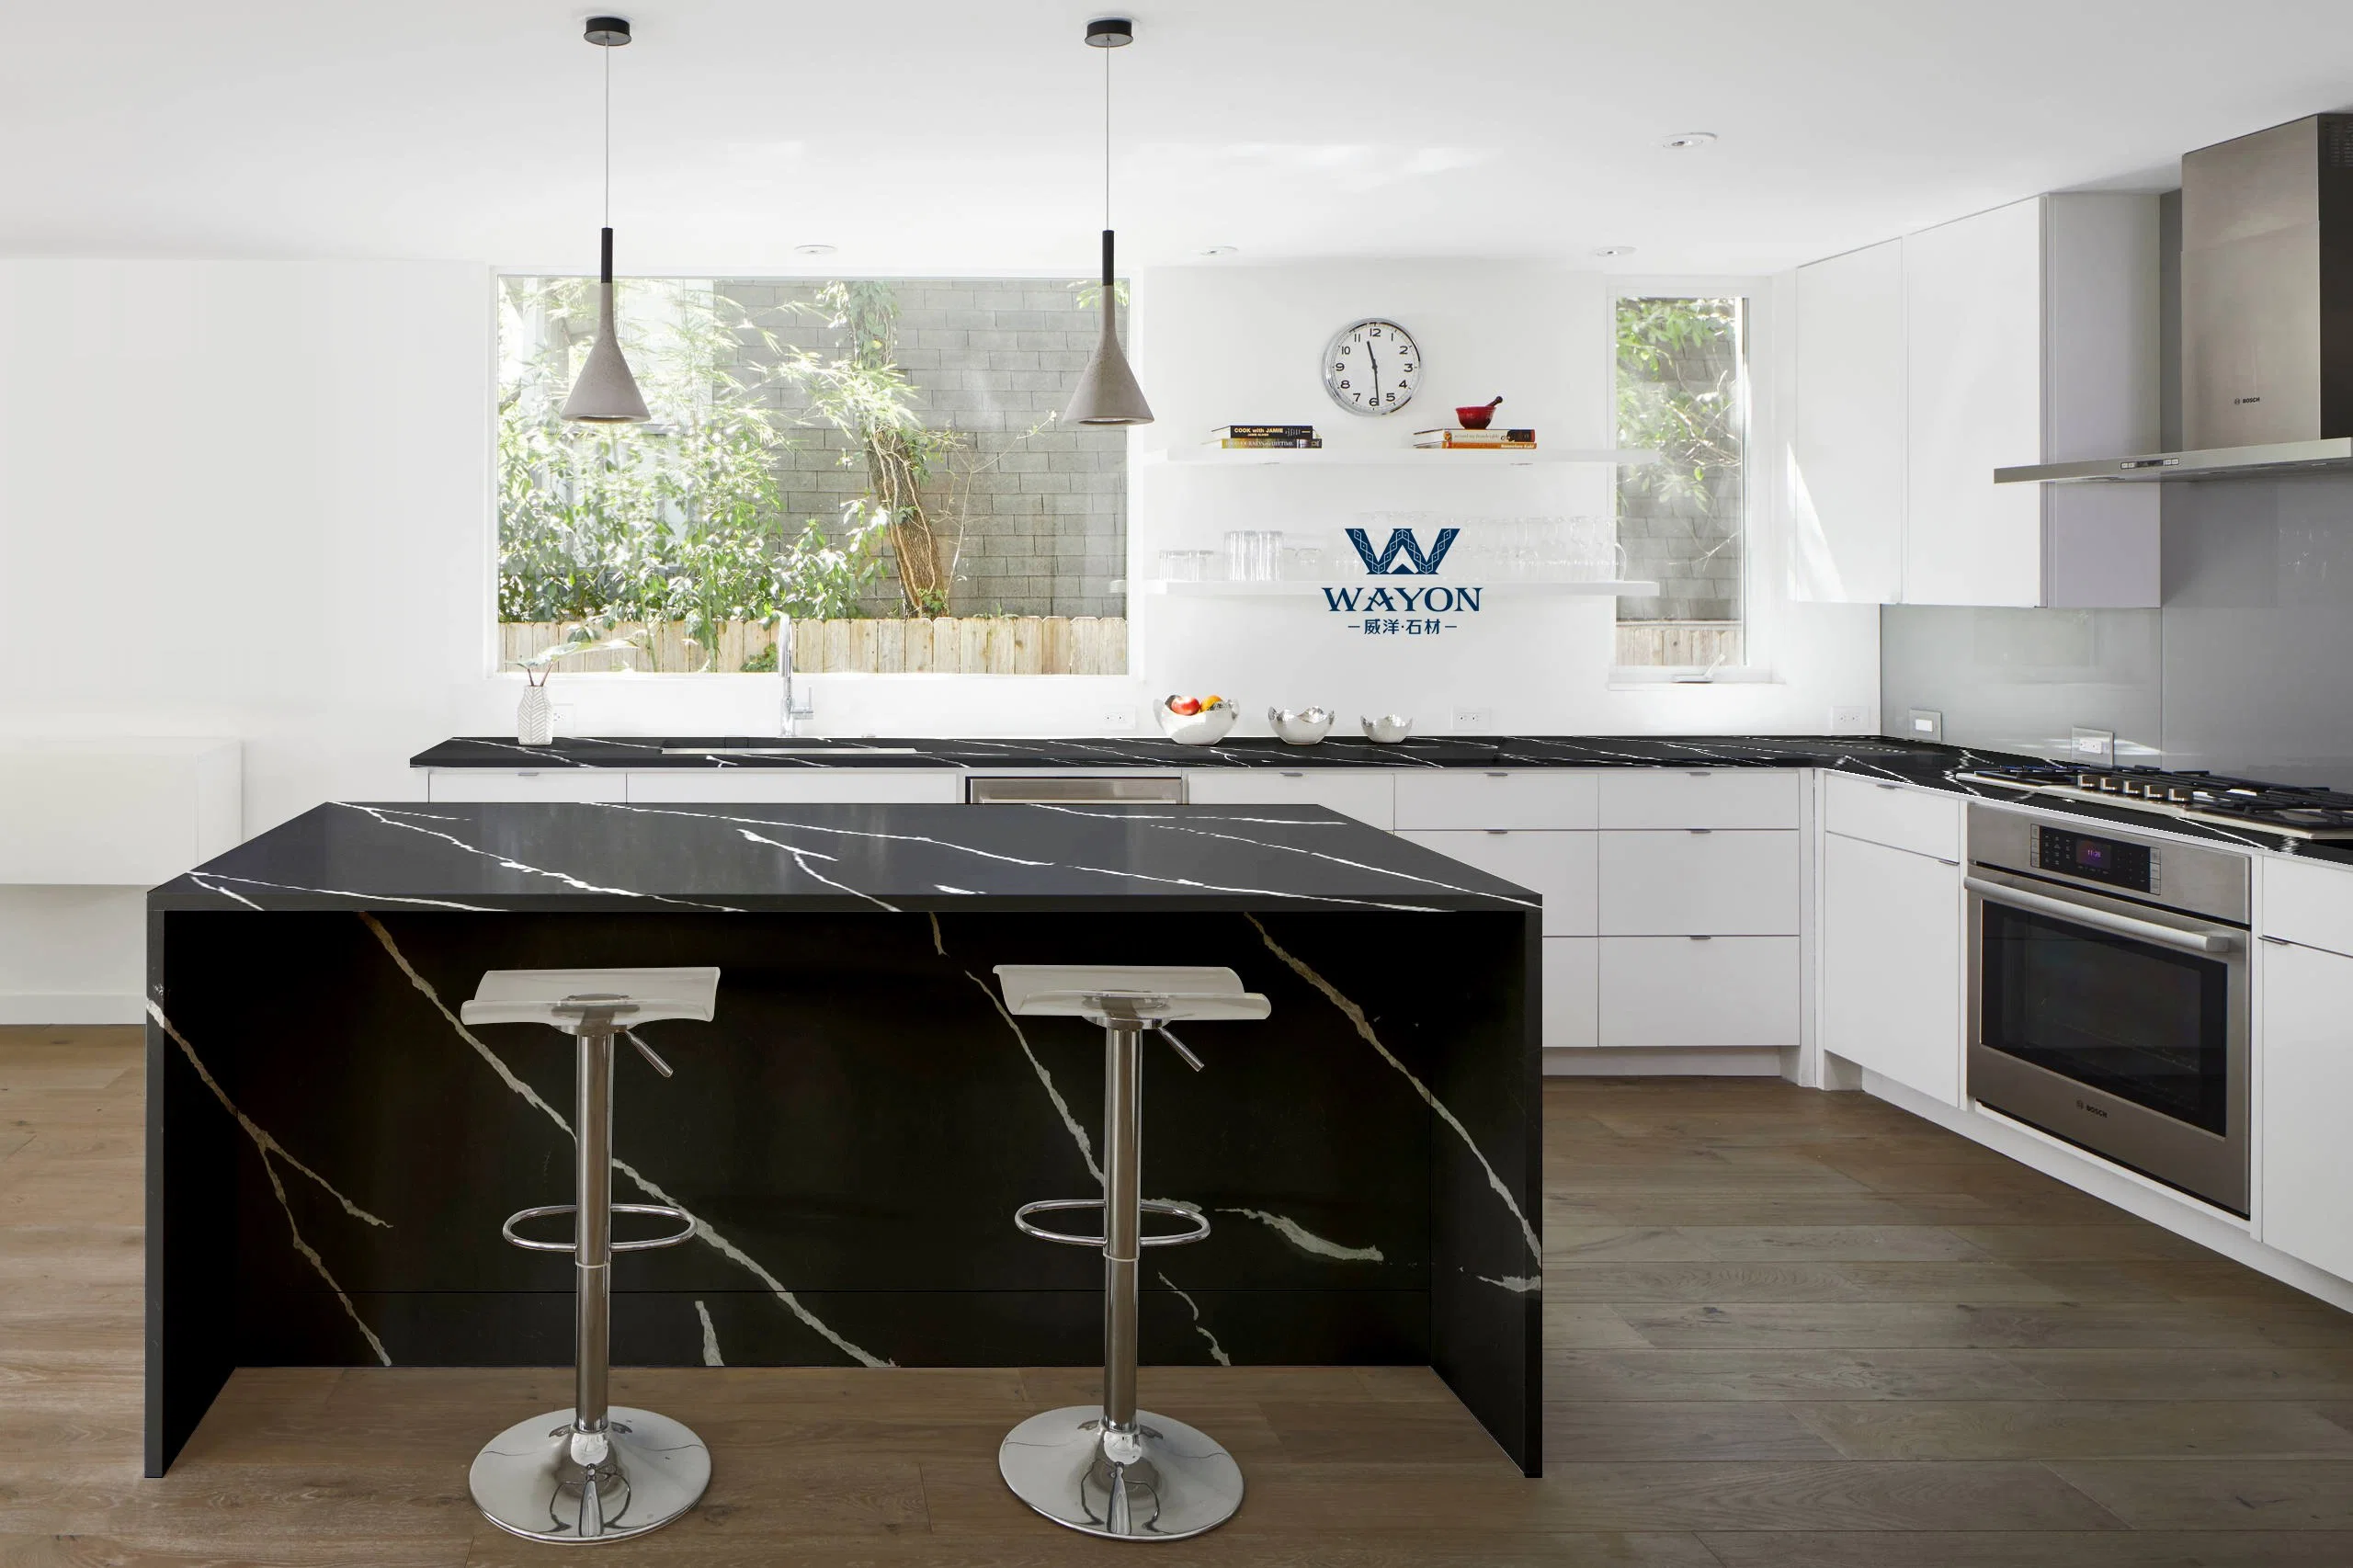 Project Copy Natural Granite Quartz Stone for Island Top Kitchen Countertop Cut to Size